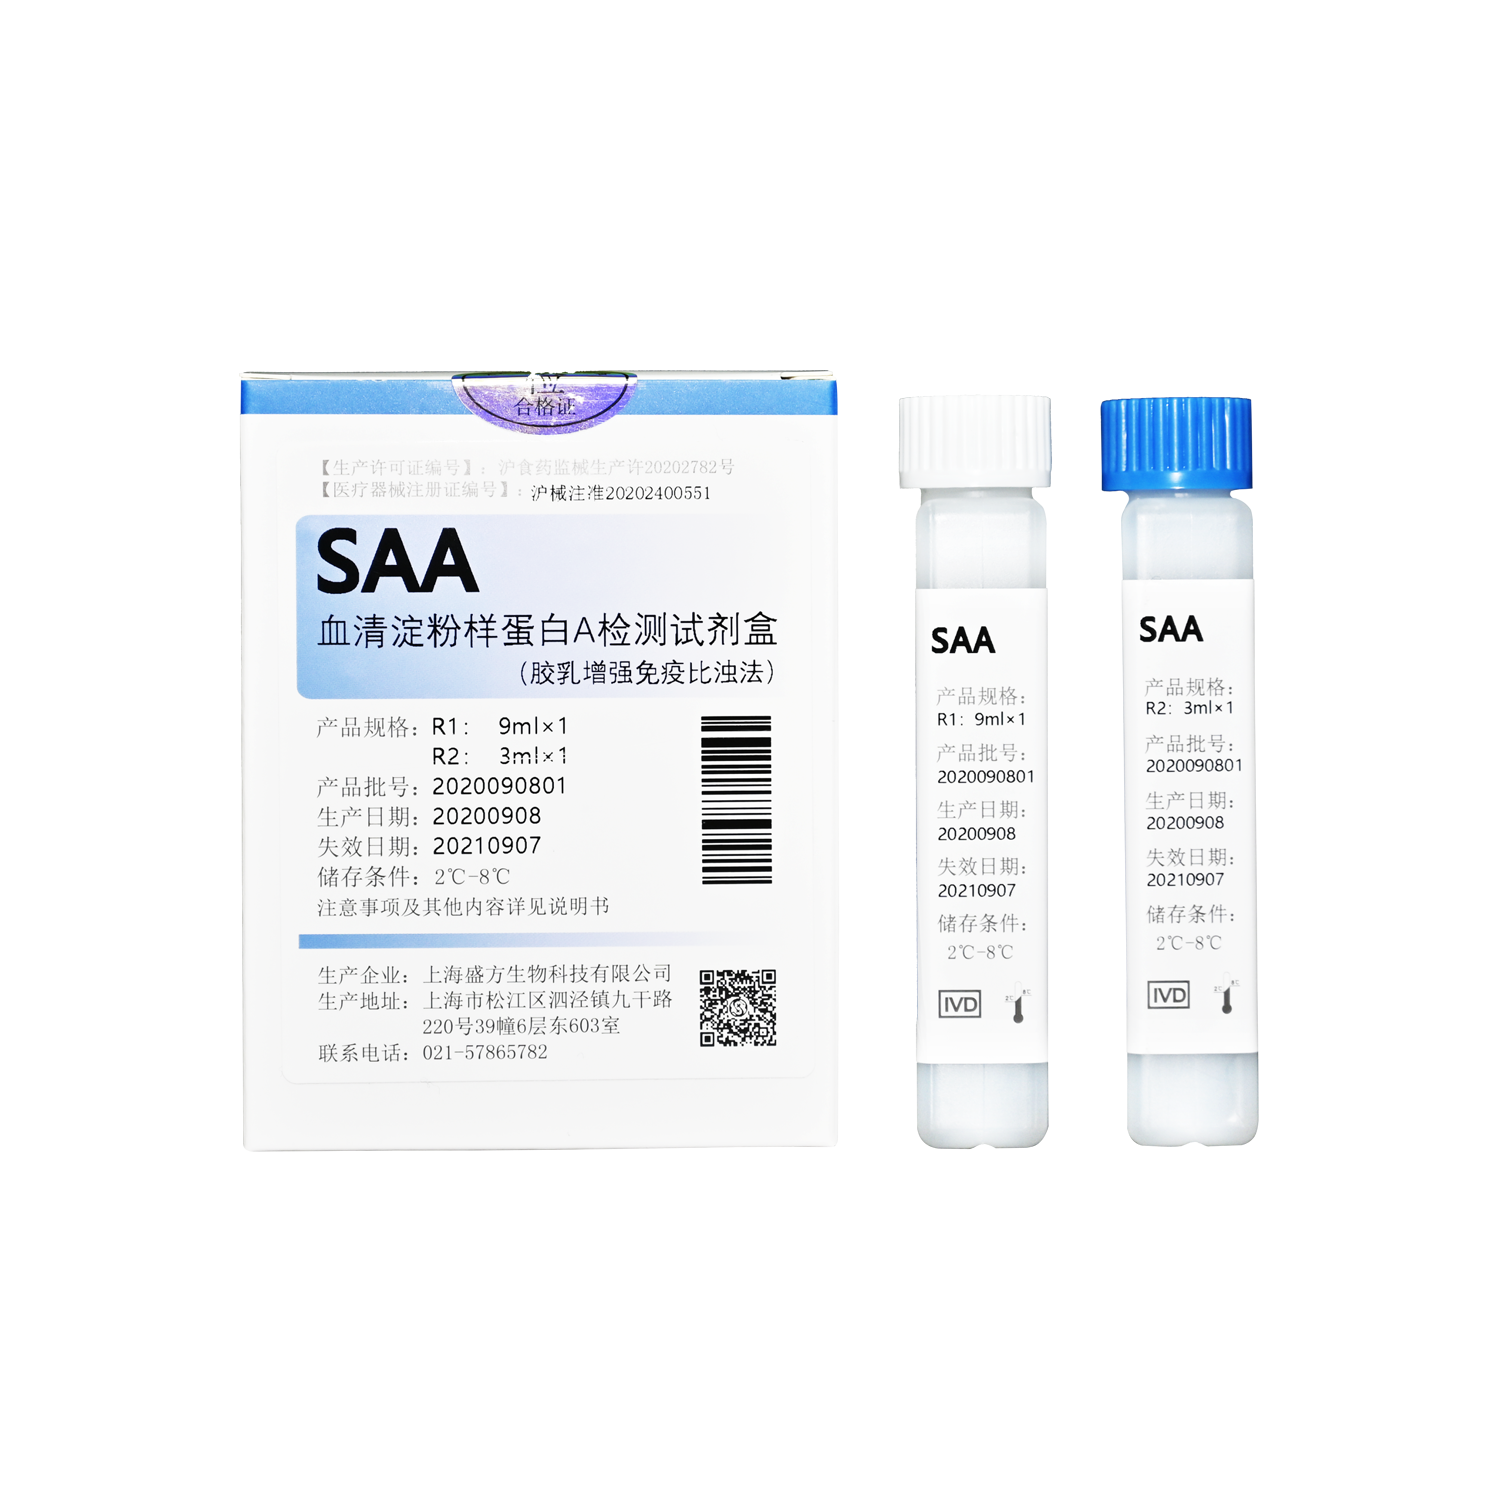 SAA 血清淀粉样蛋白A检测试剂盒（胶乳增强免疫比浊法）